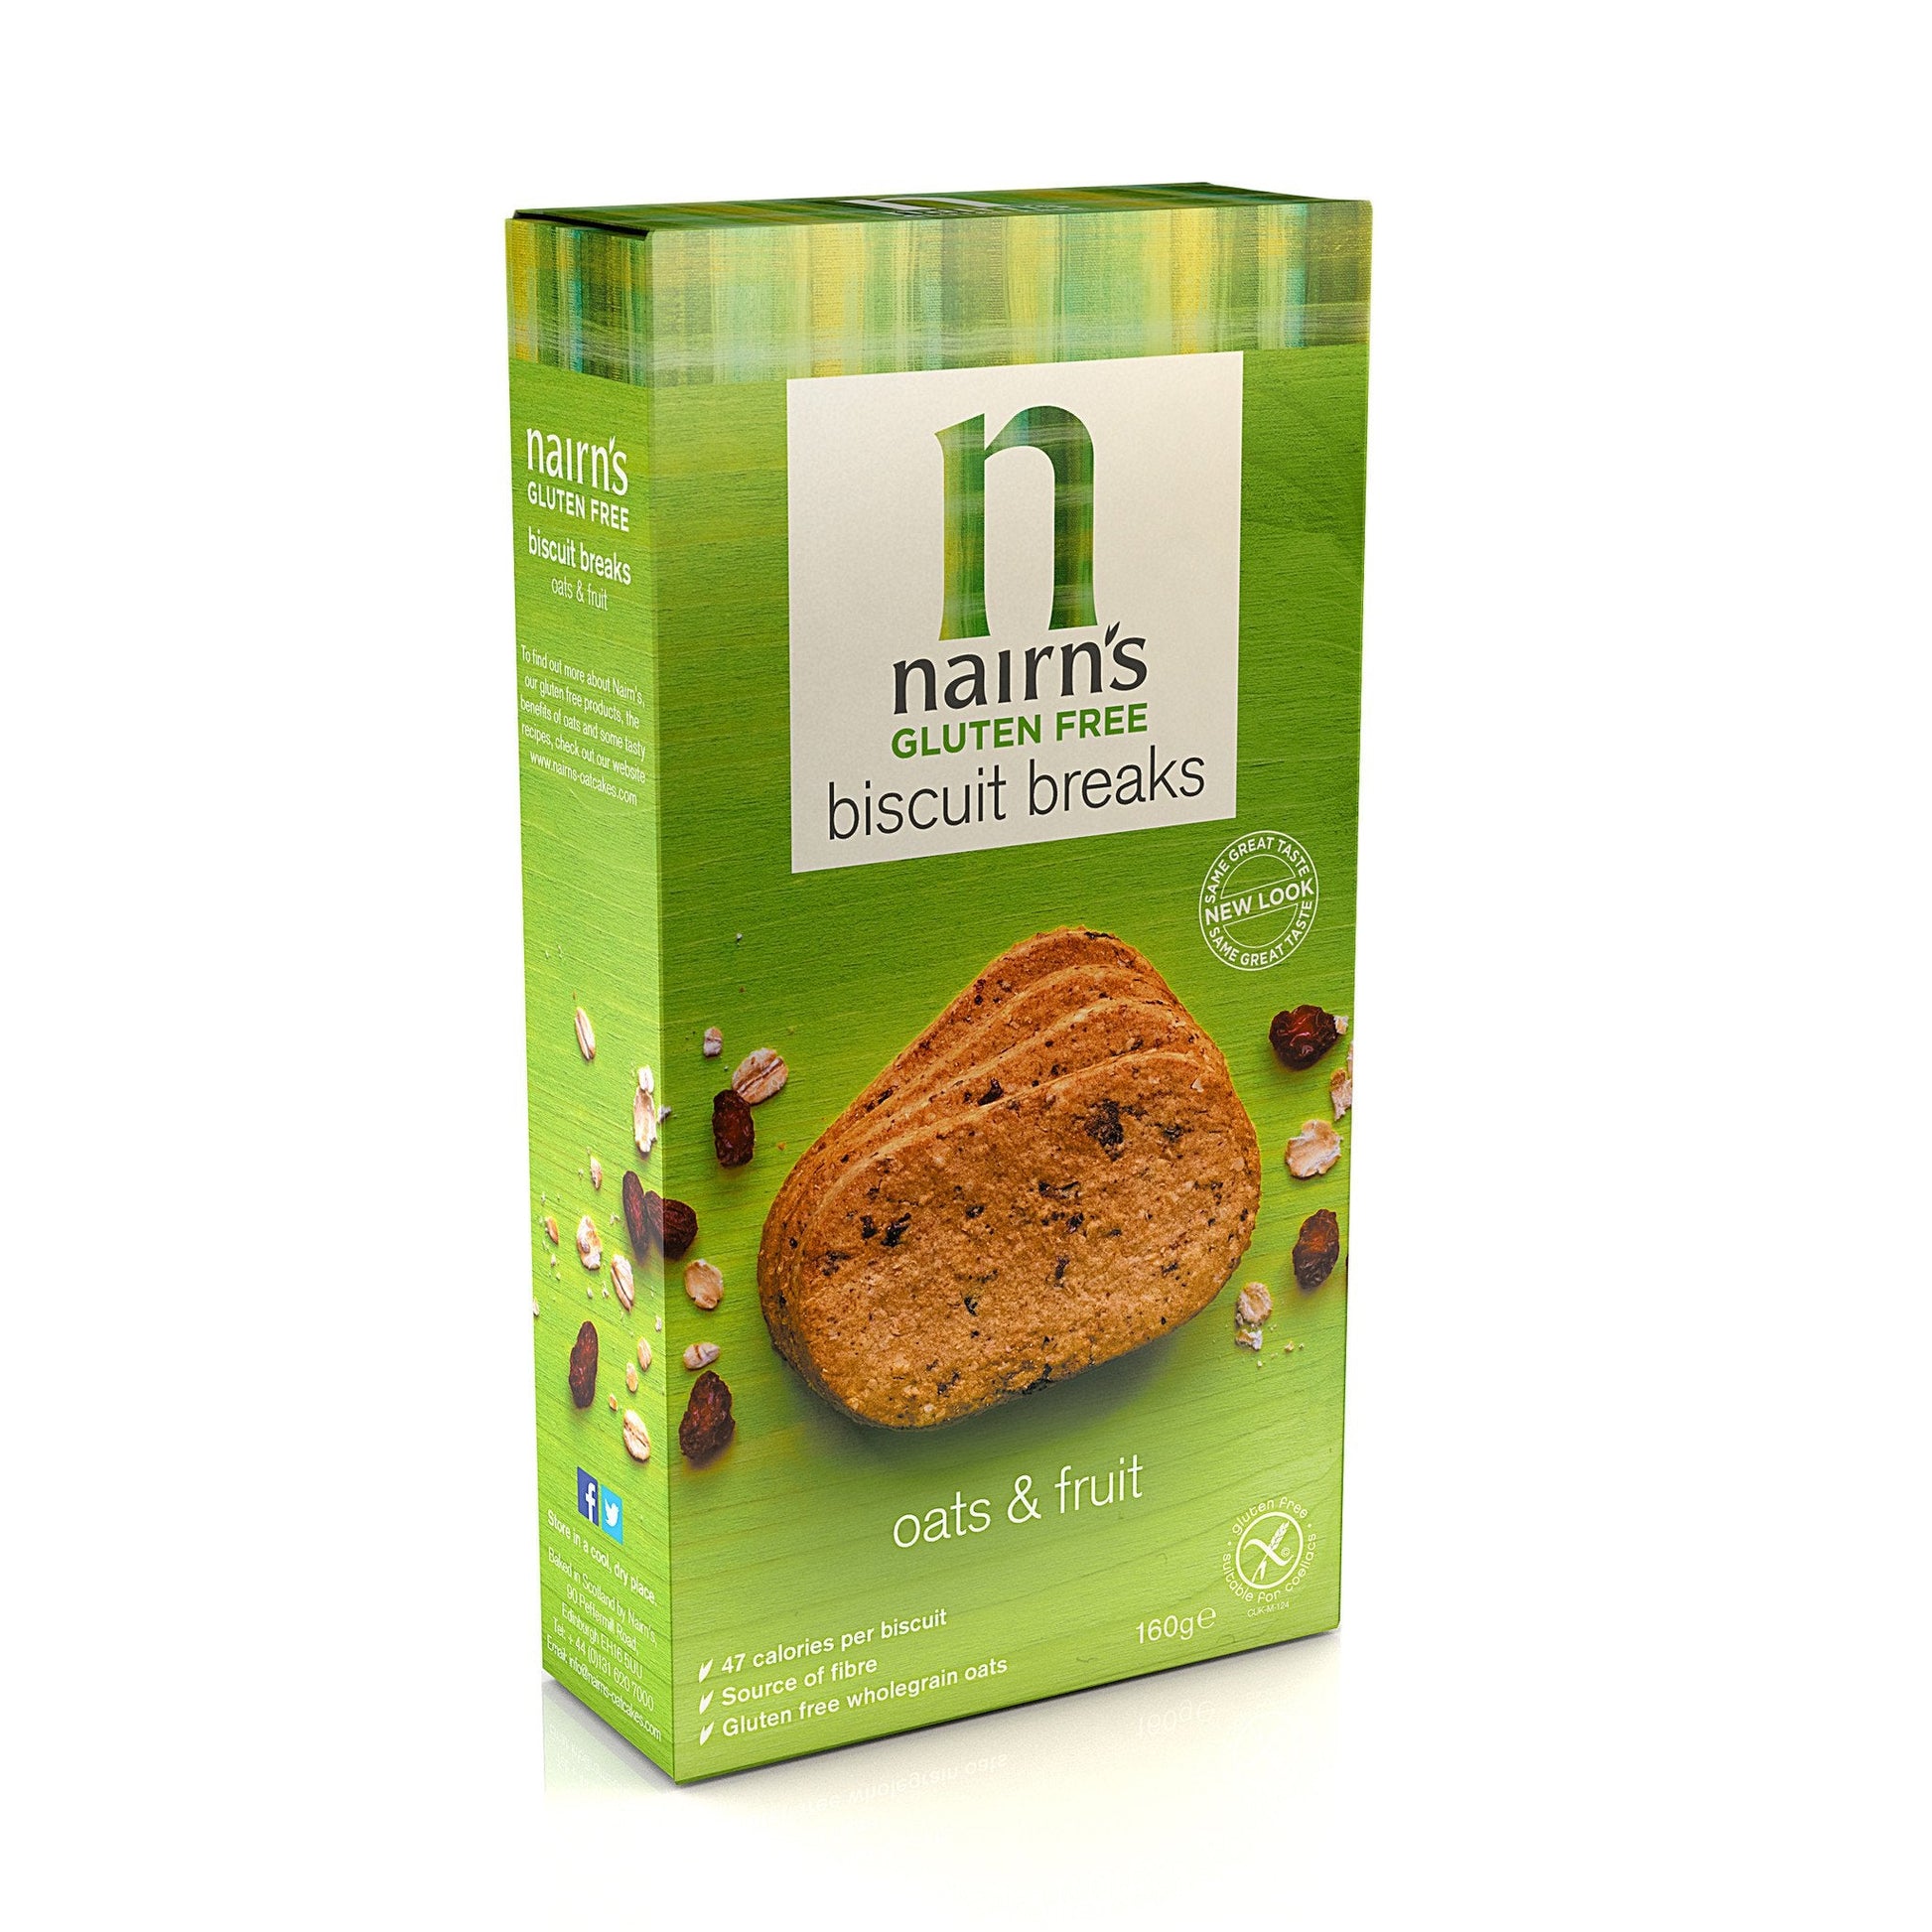 Nairns Gluten Free Oats & Fruit Biscuit Breaks 160g - Just Natural